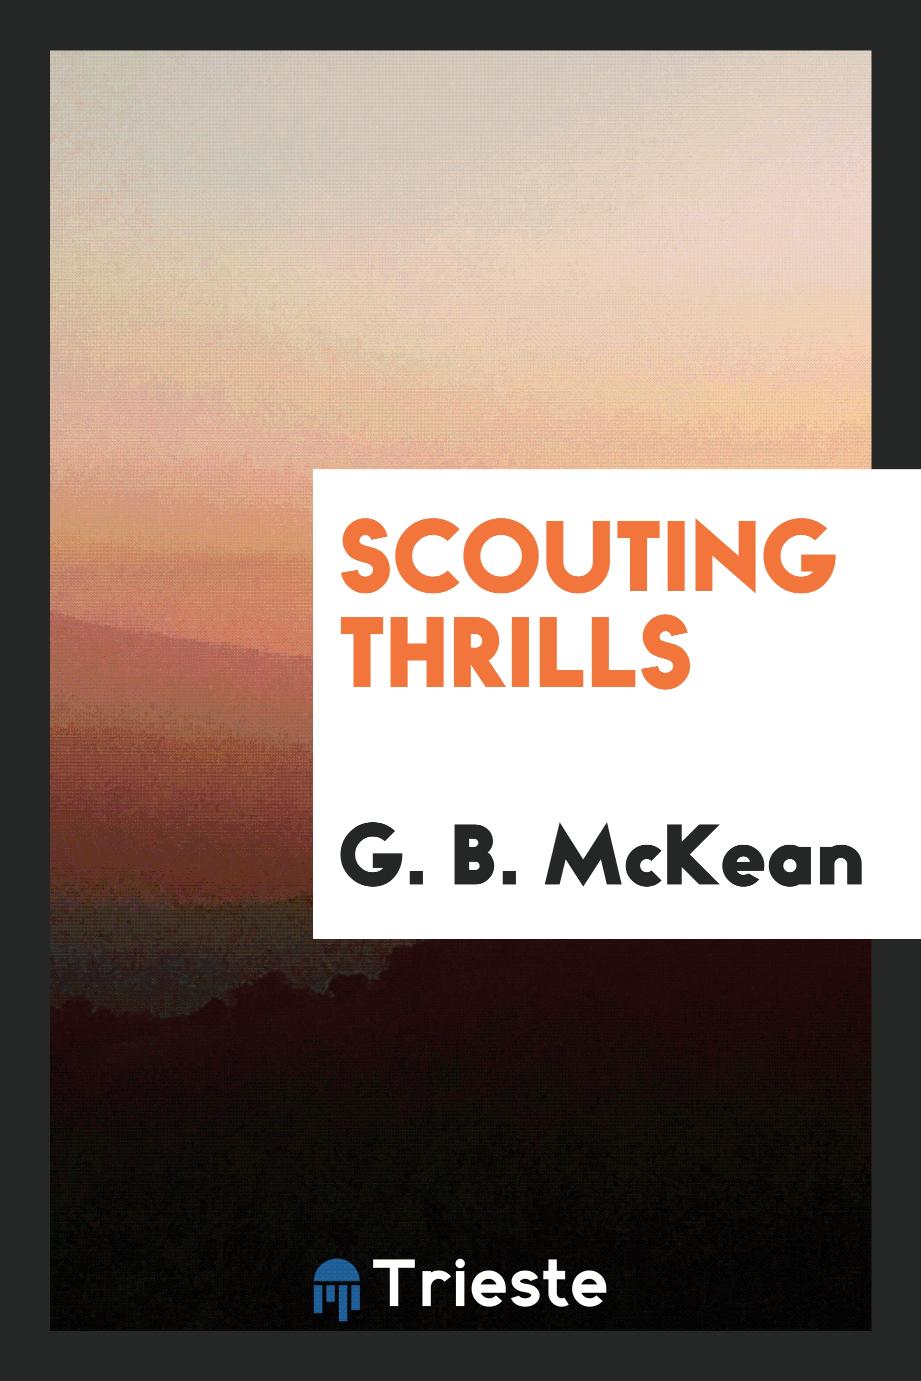 Scouting thrills